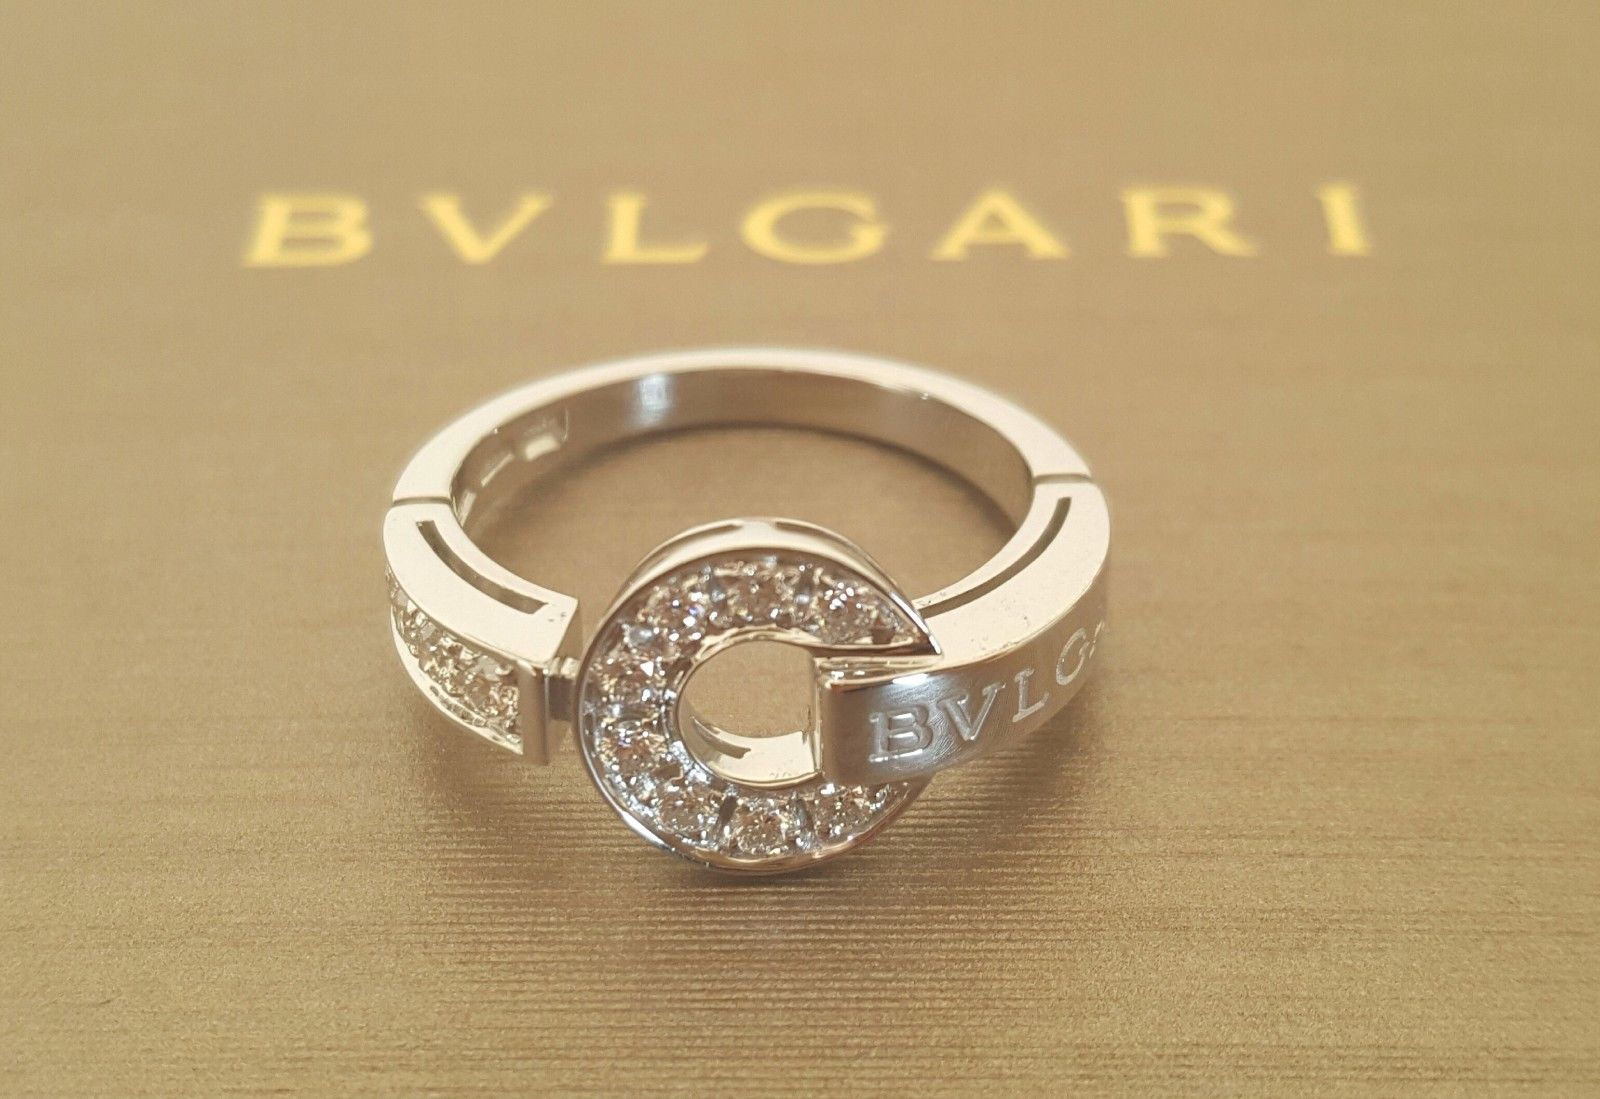 bvlgari ring made in italy